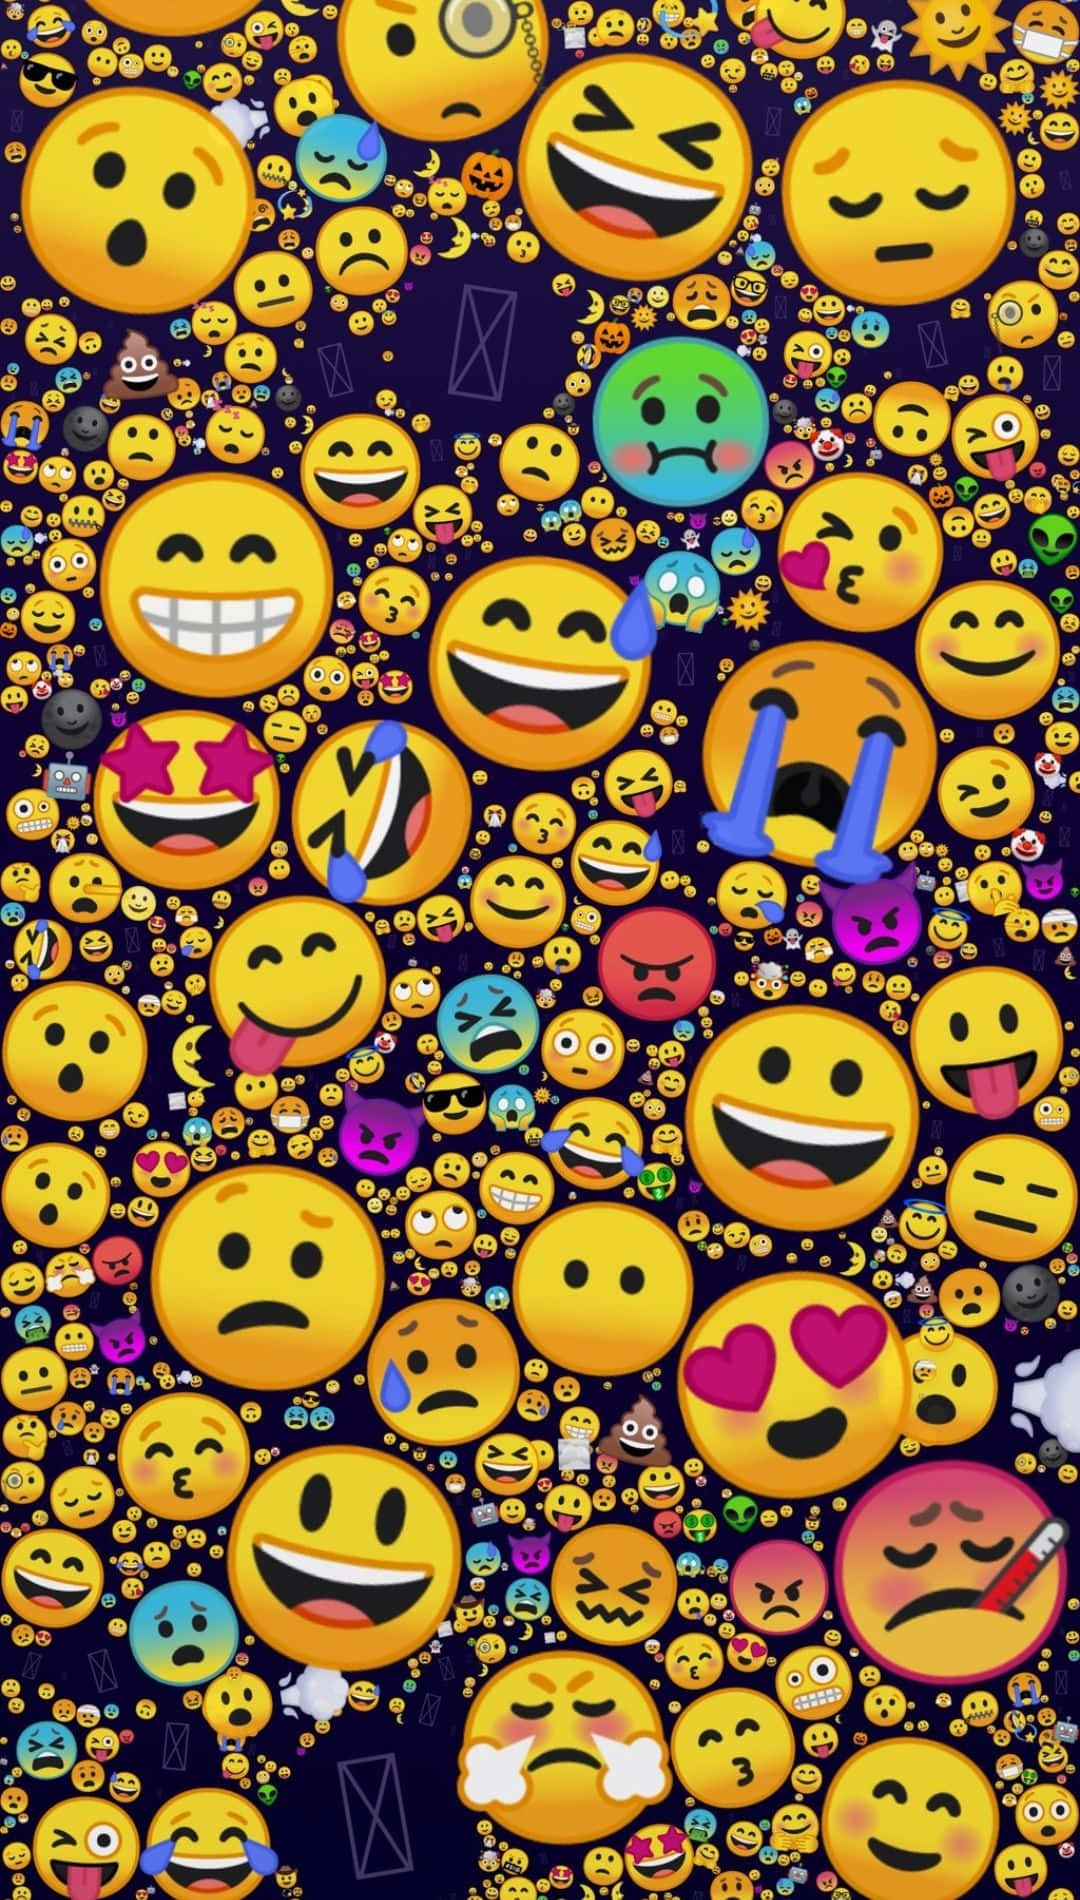 Assorted Emoji Explosion Wallpaper